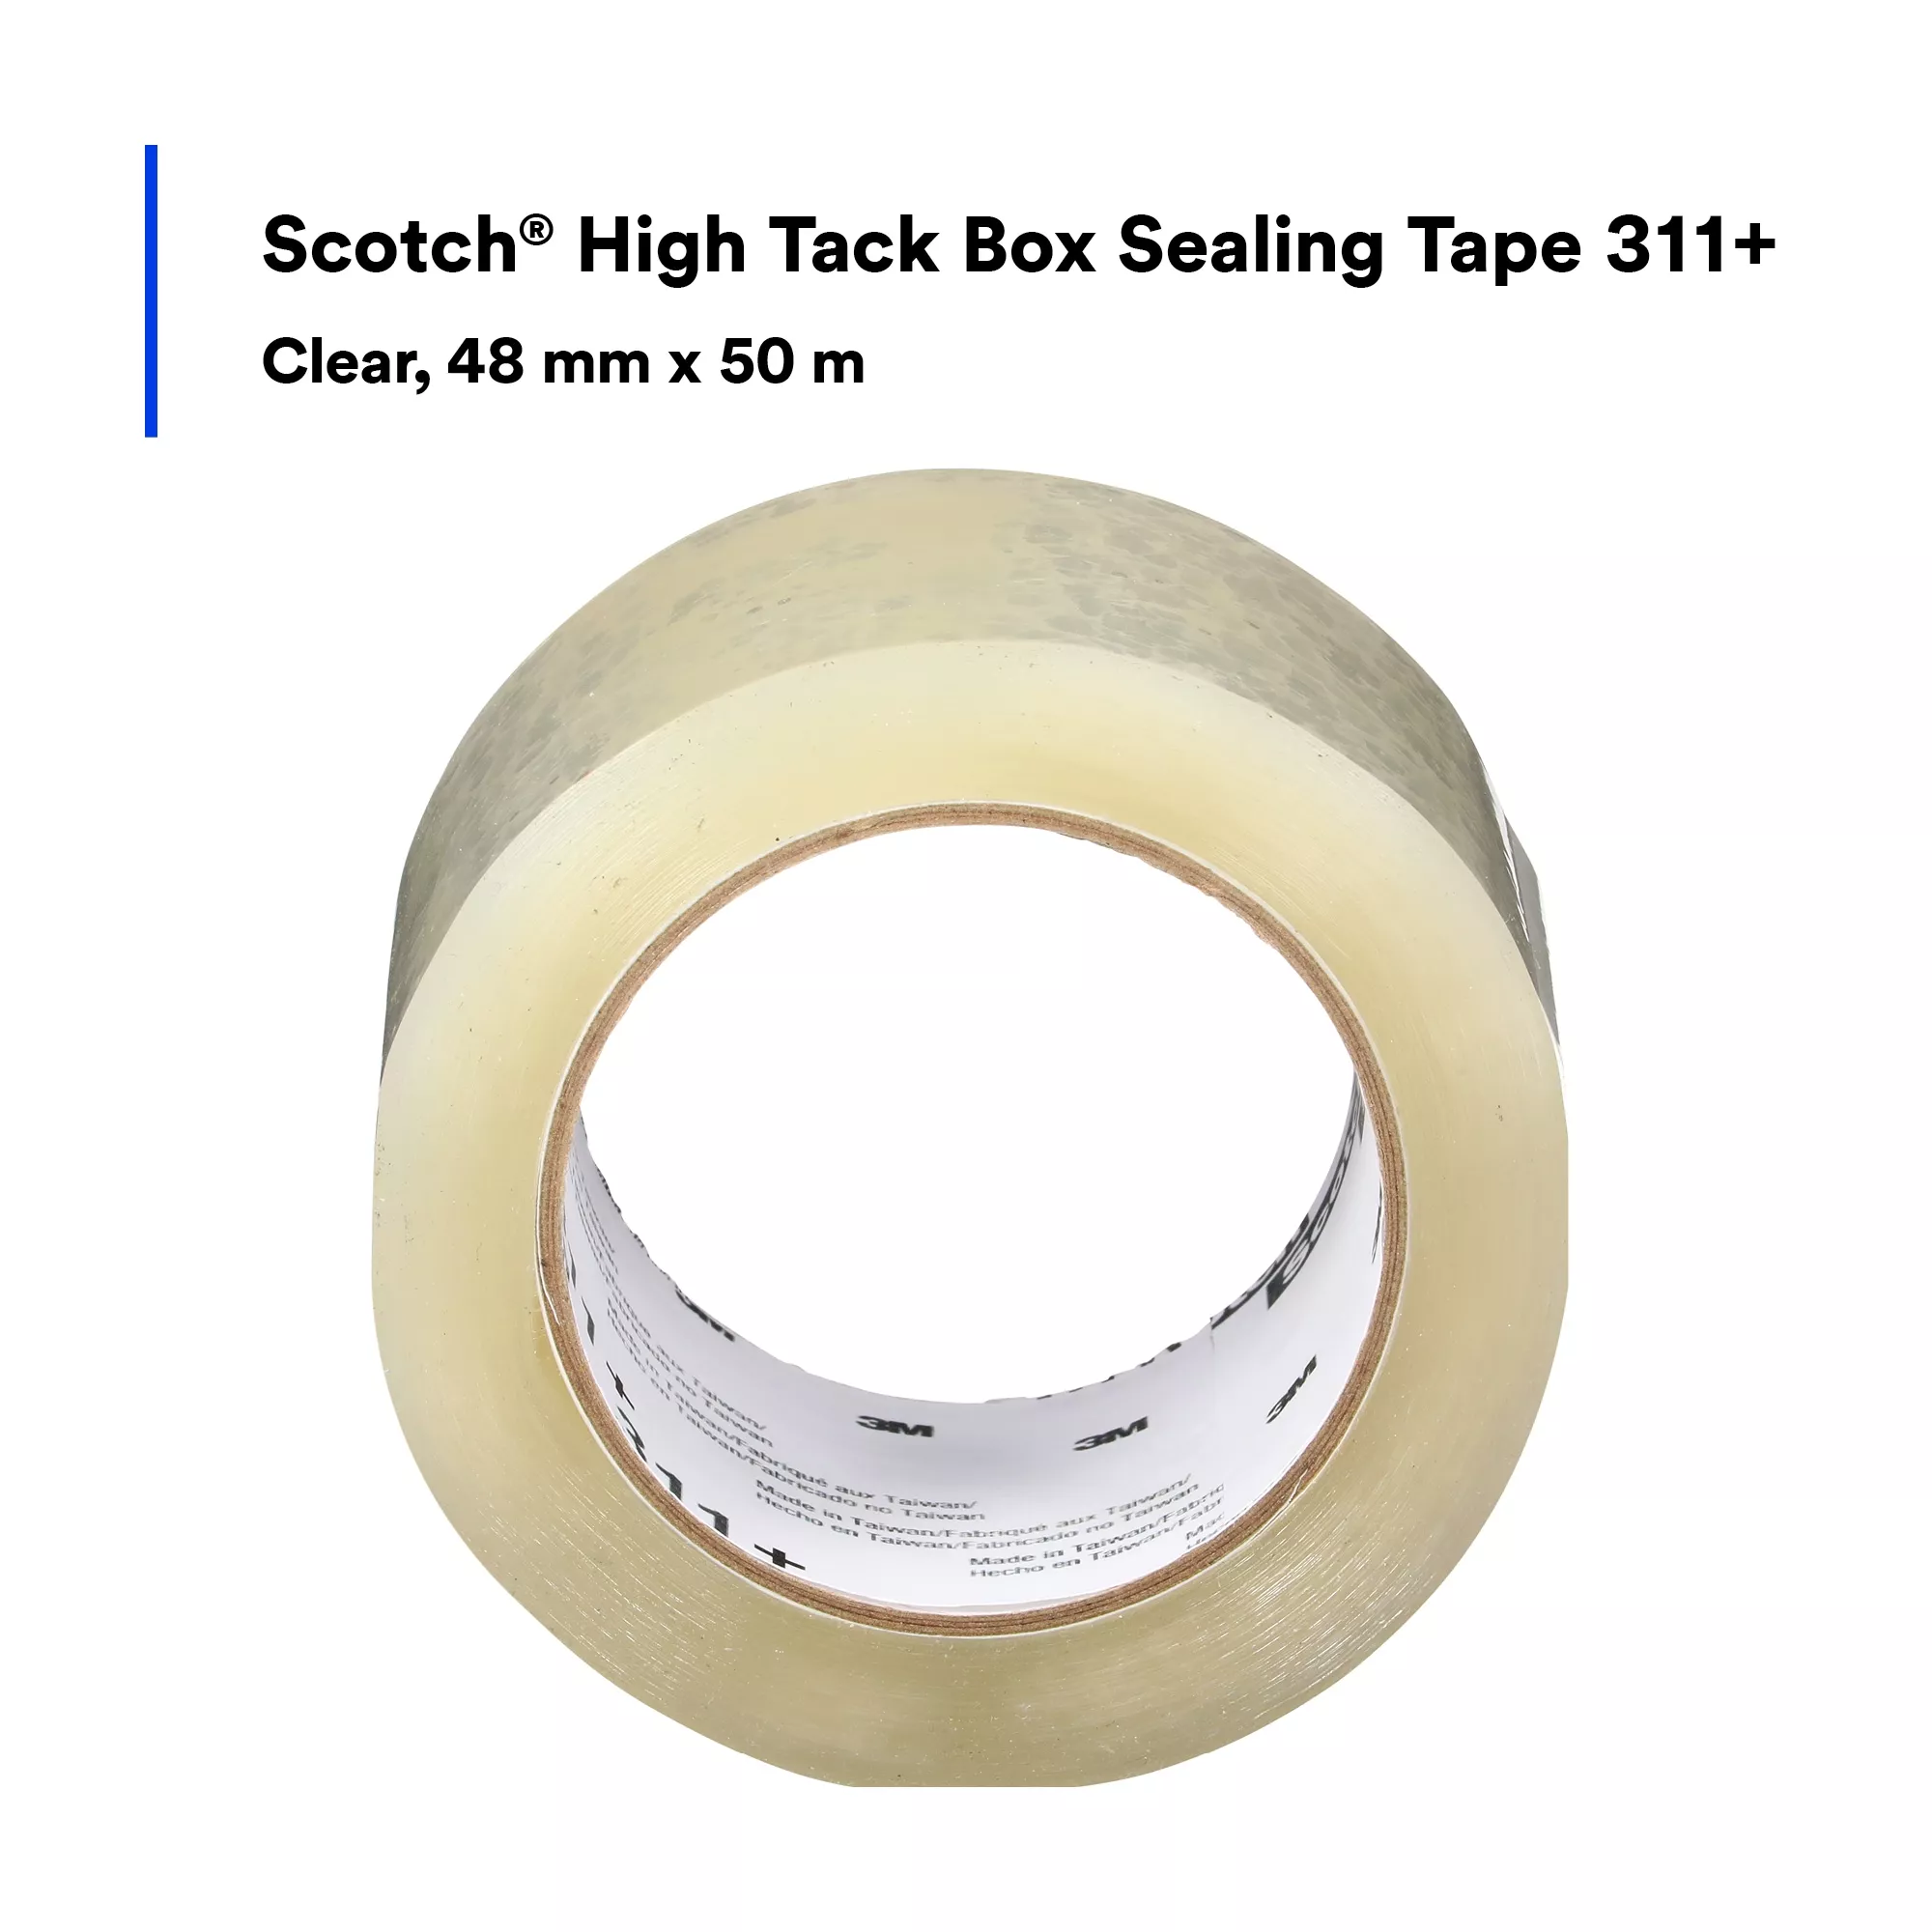 SKU 7100253843 | Scotch® High Tack Box Sealing Tape 311+